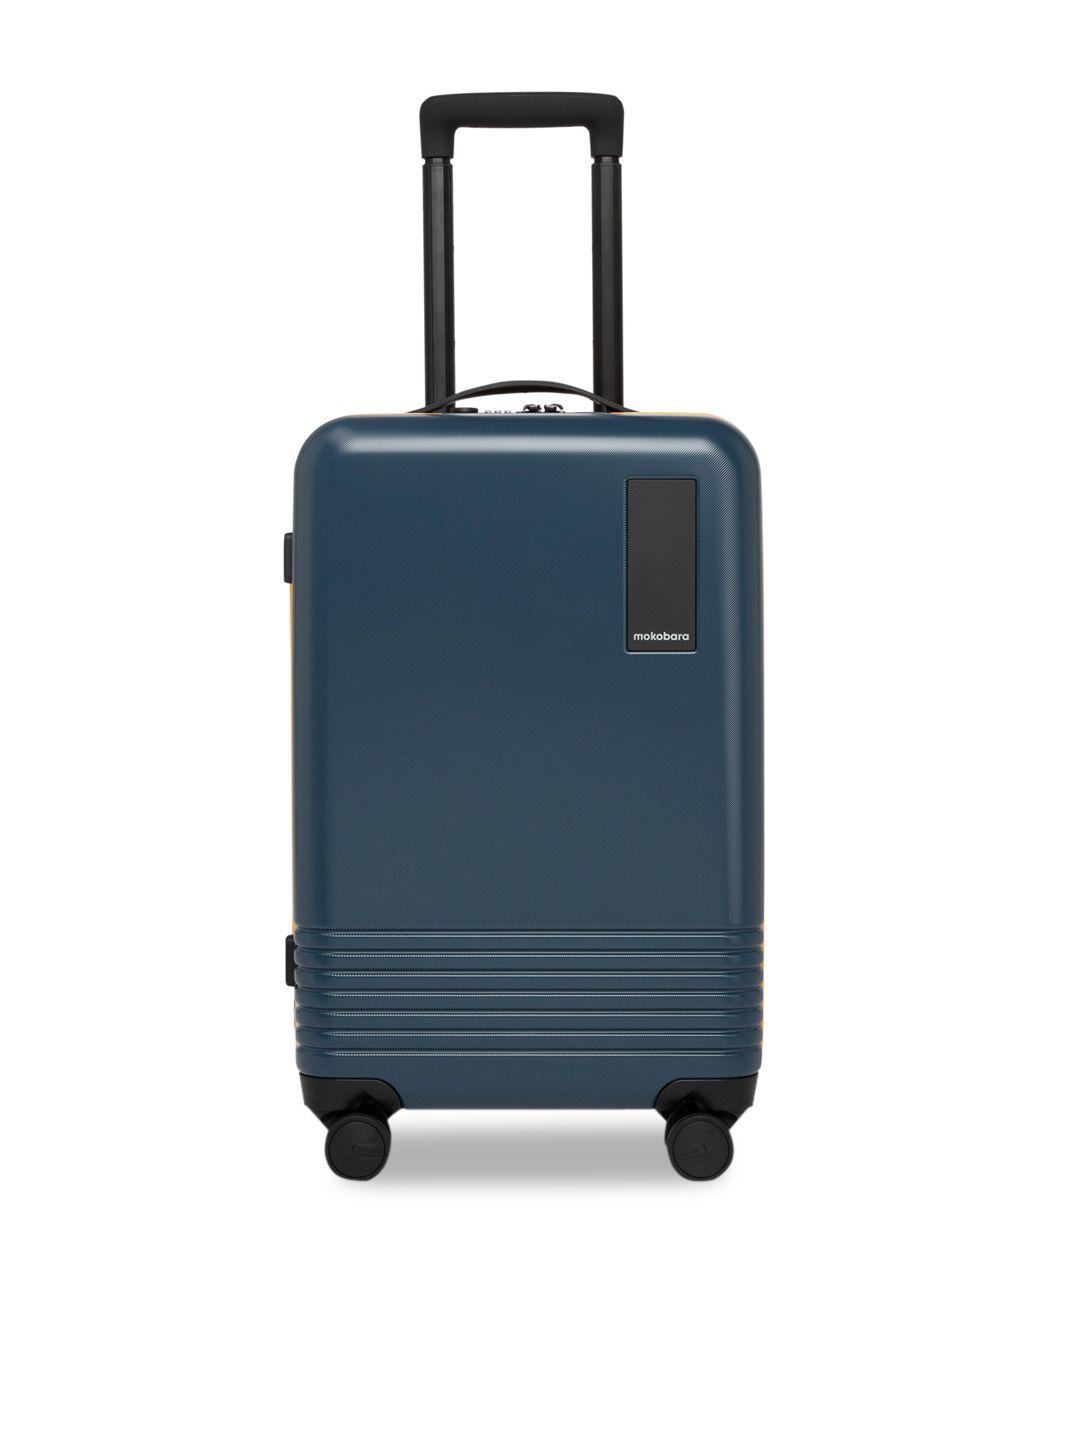 mokobara unisex navy blue textured hard-sided cabin trolley suitcase